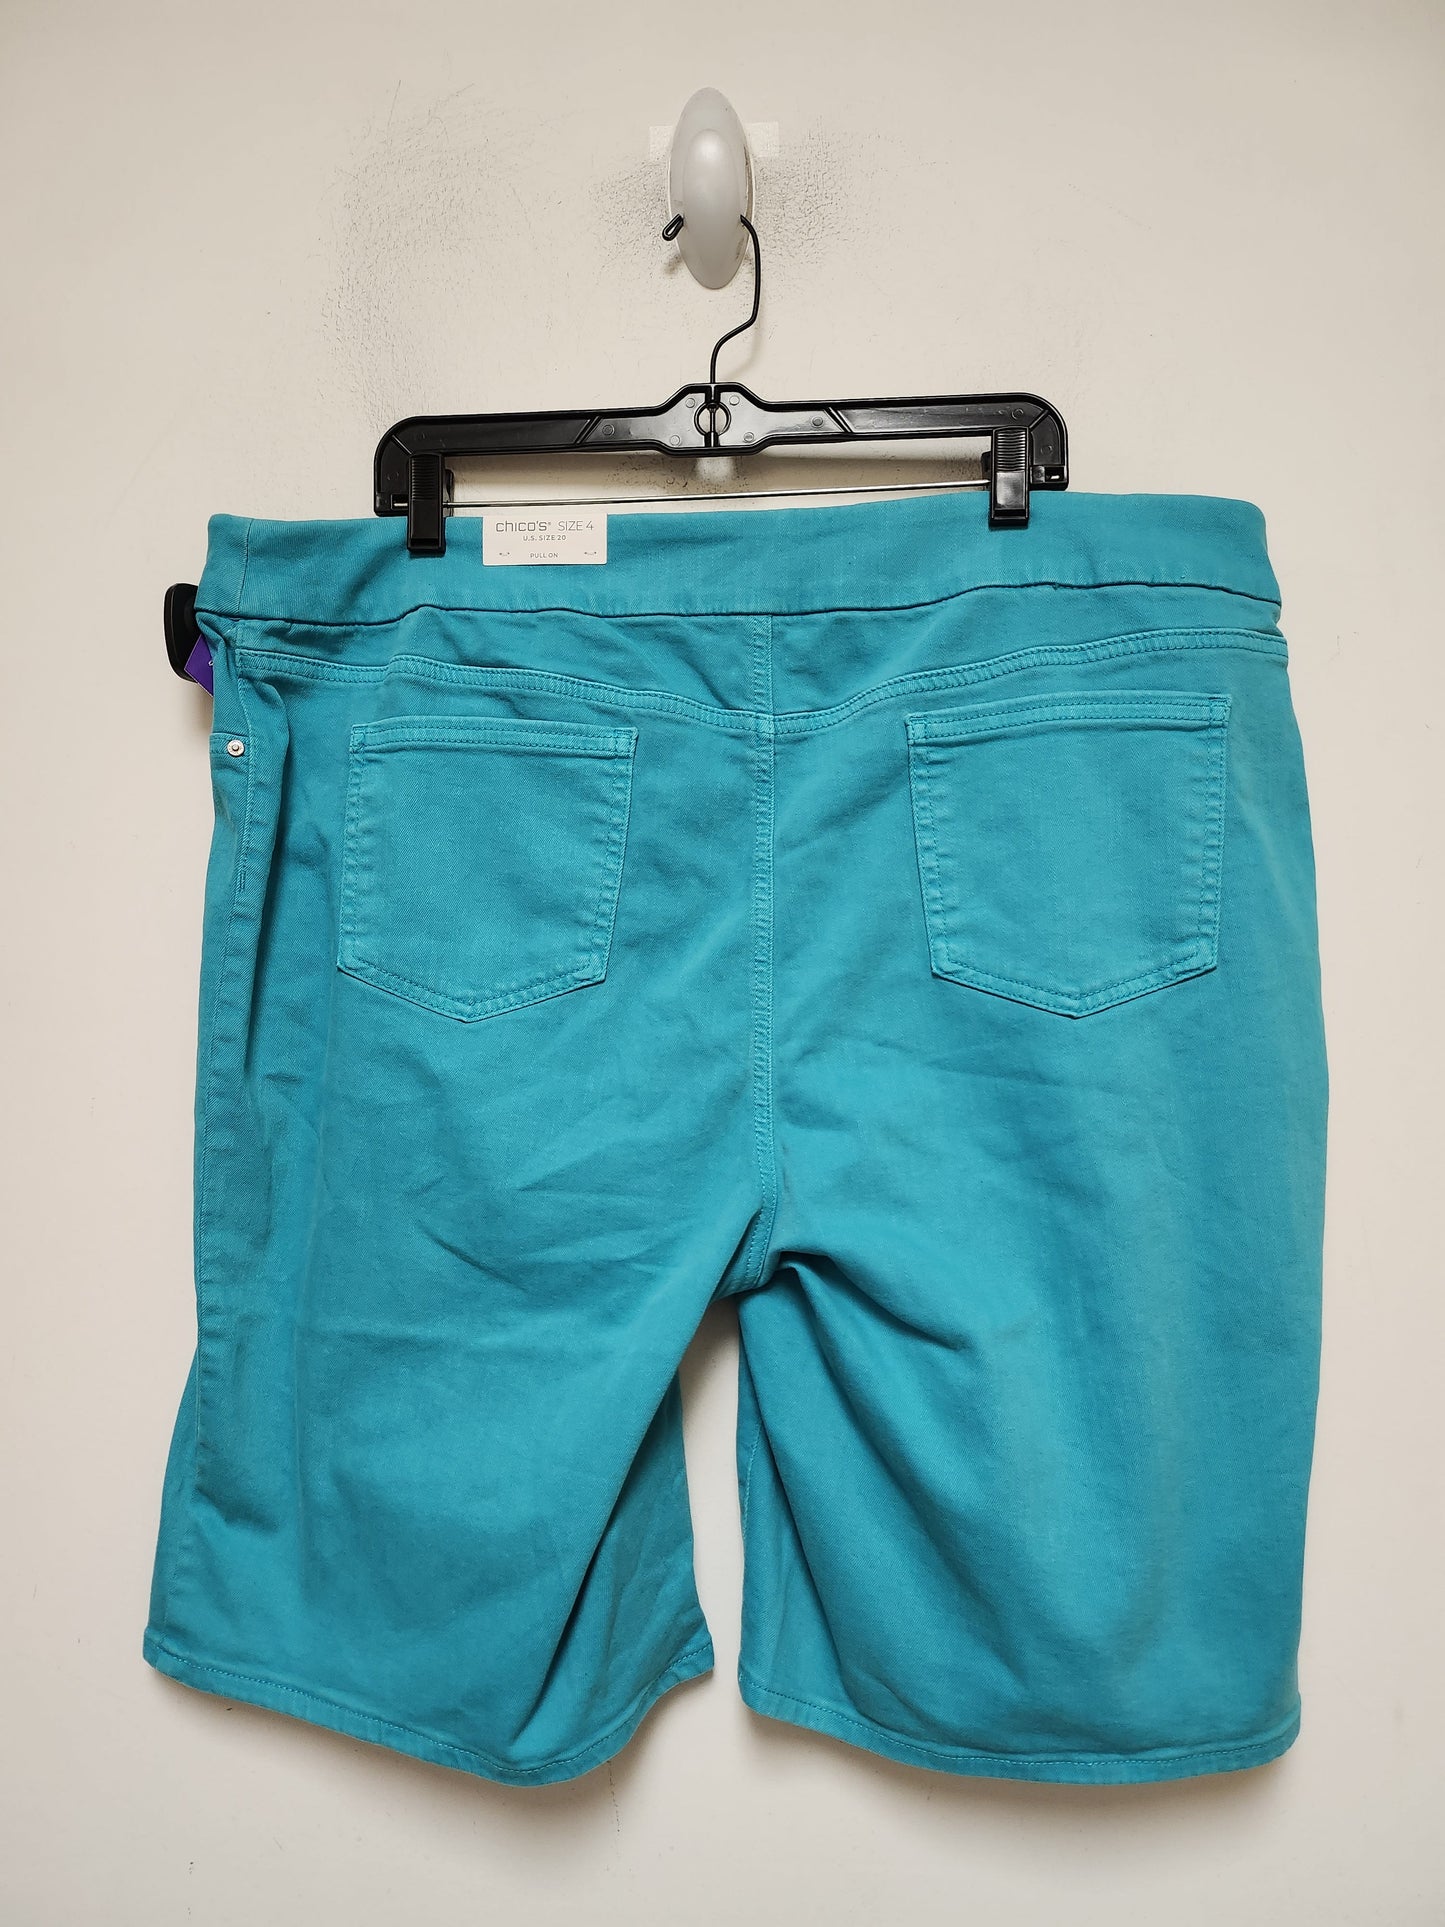 Blue Shorts Chicos, Size 20